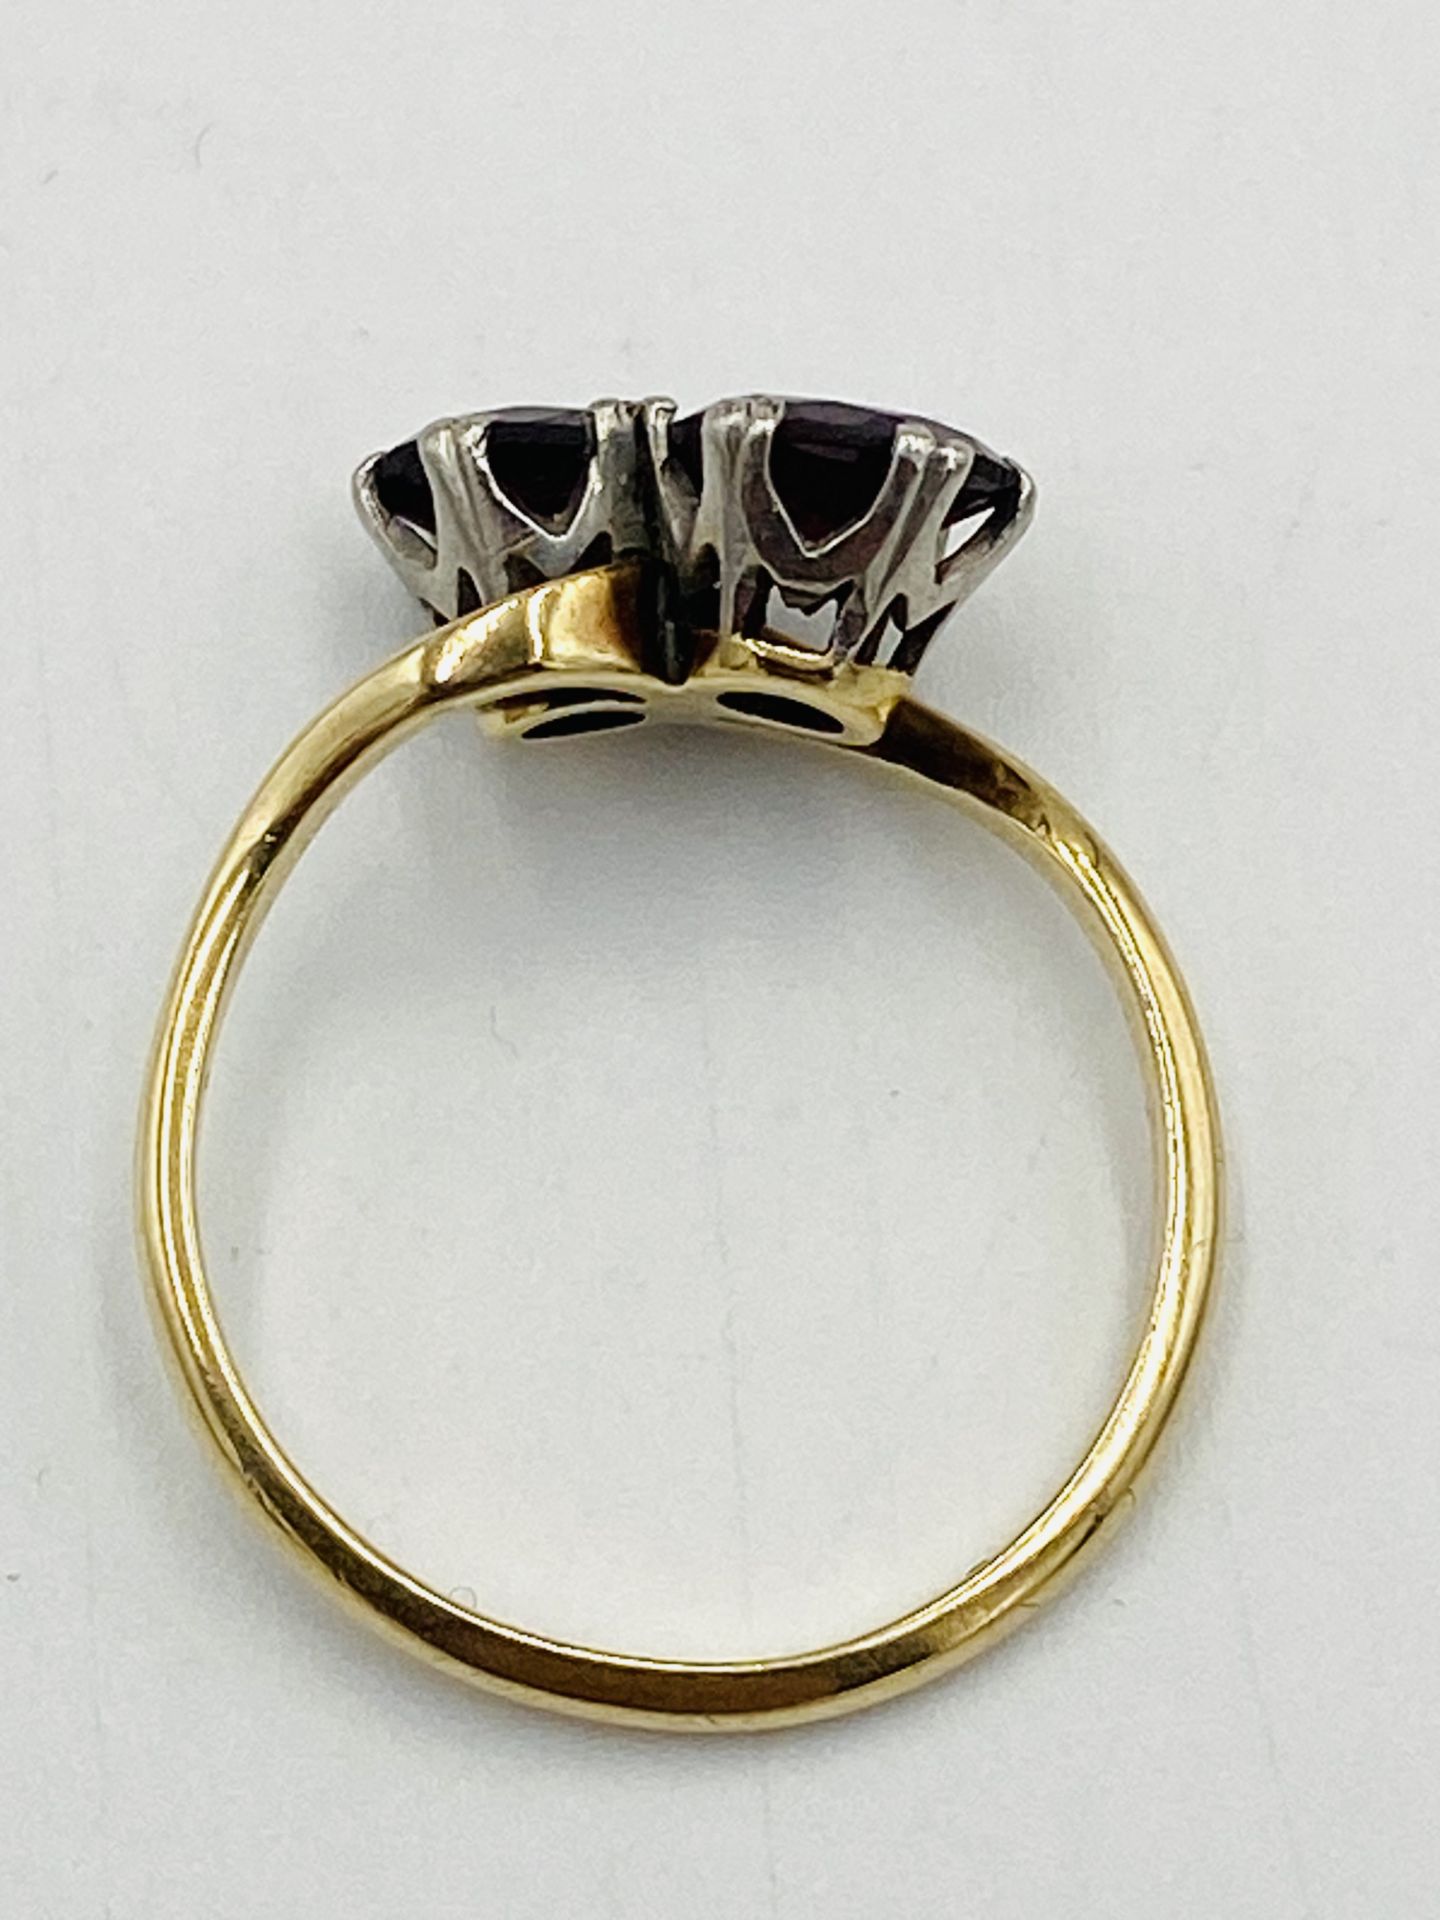 9ct gold twist ring - Image 4 of 4